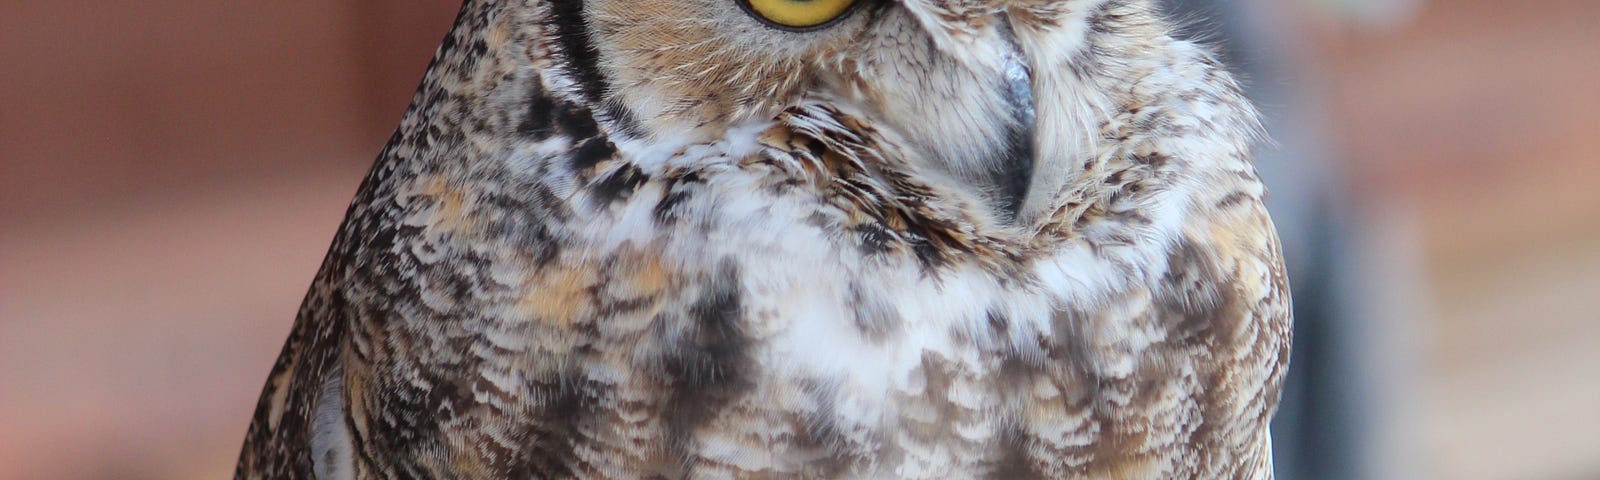 Great horned owl specimen in a museum